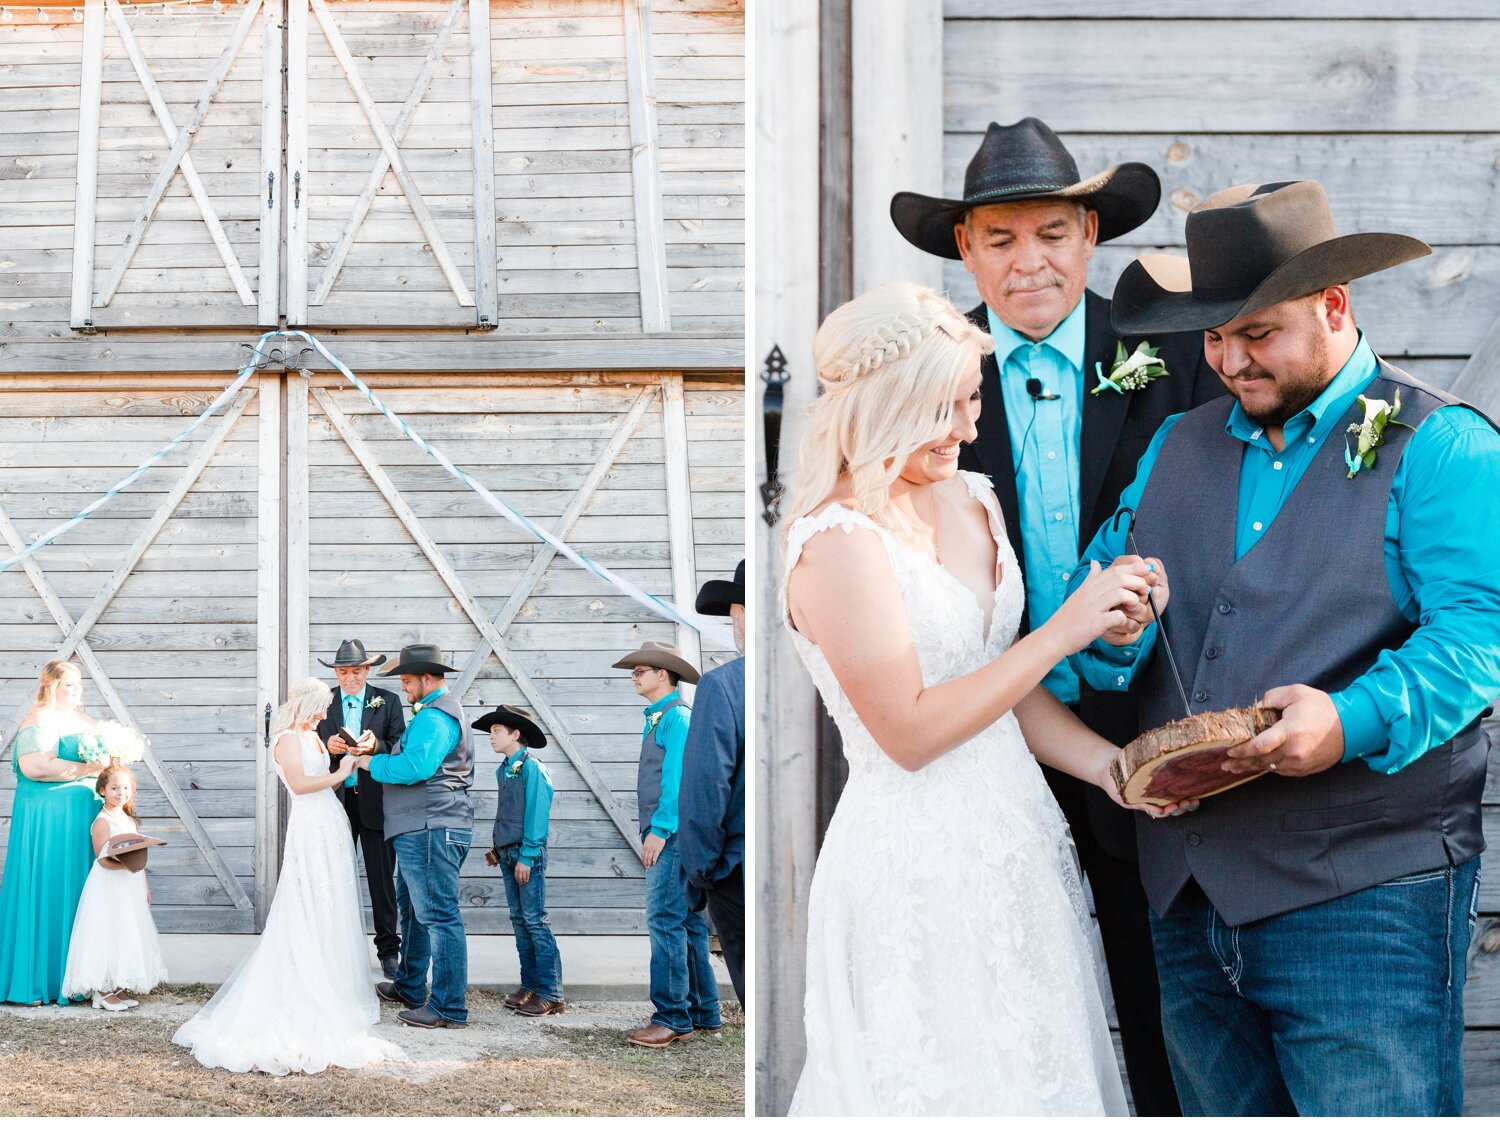 Destinnee + Chance Rustic Barn Wedding at Elm Creek Ranch_0054.jpg